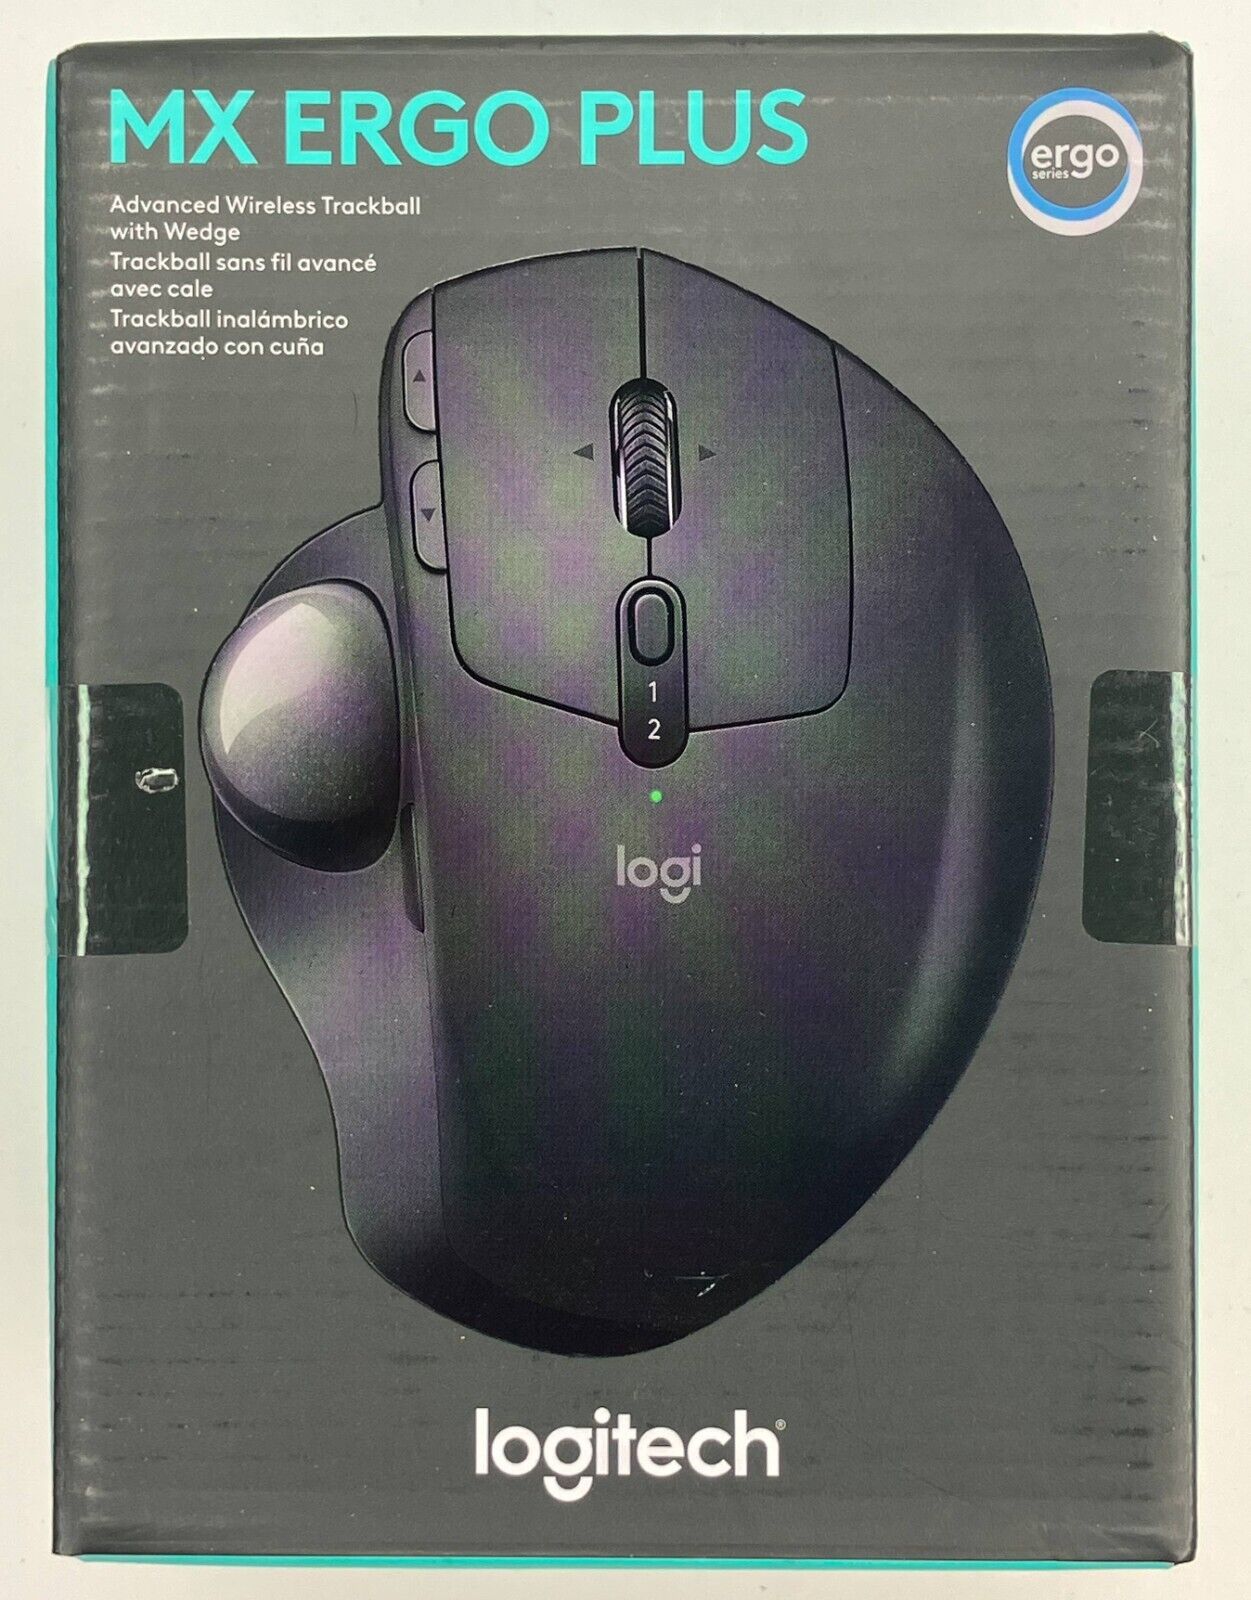 Logitech MX Ergo Plus Advanced Wireless Trackball Mouse With Optical Sensor